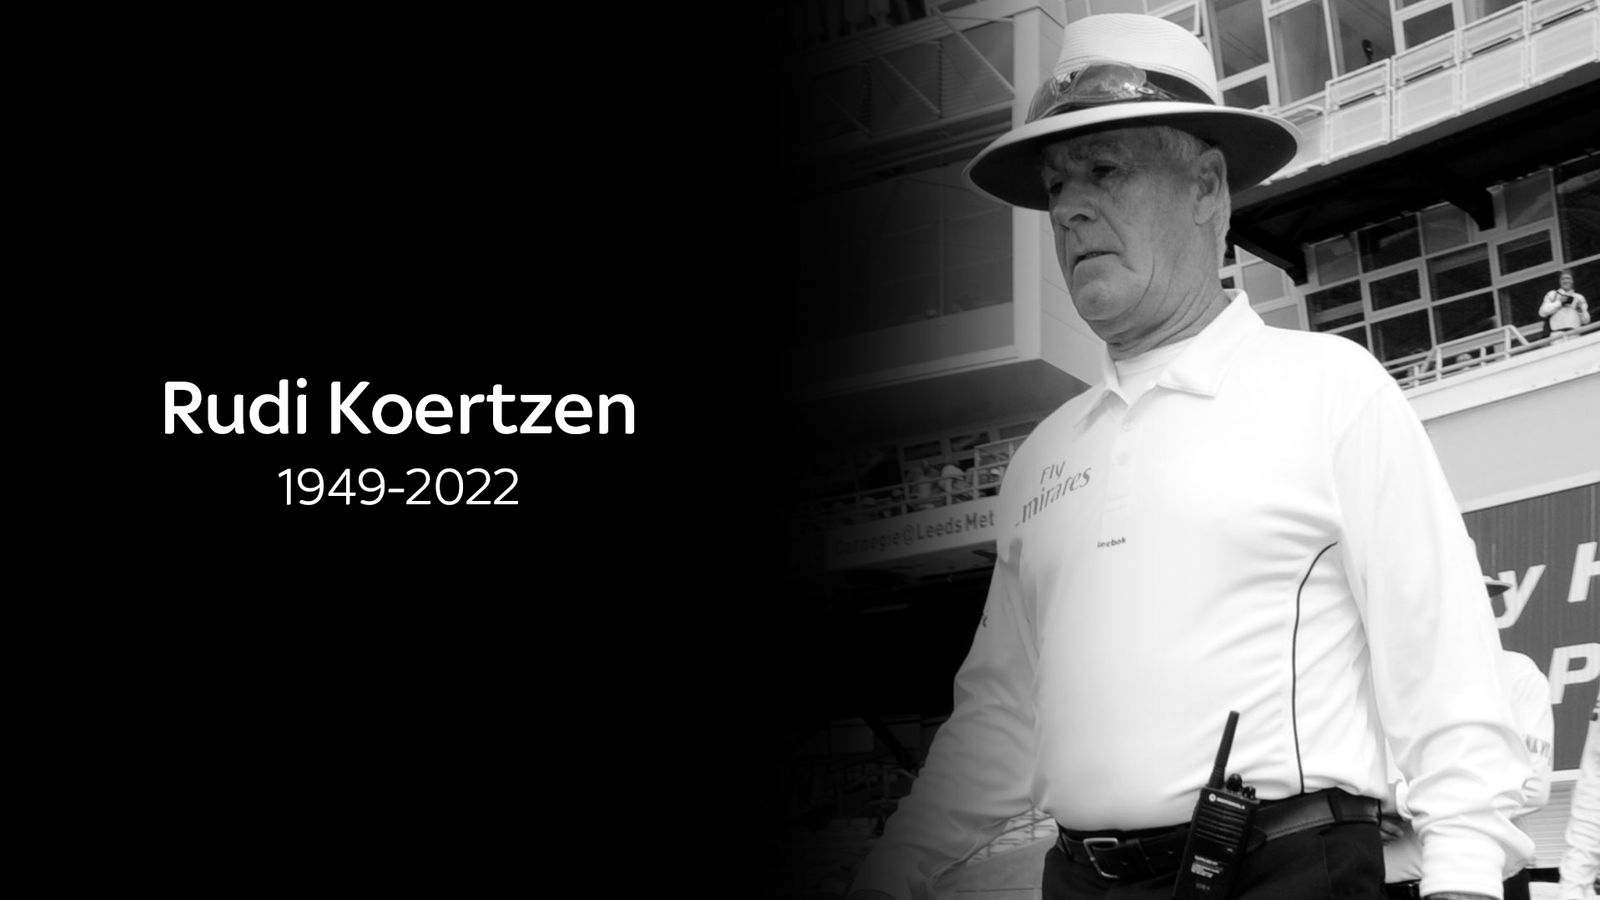 Rudi Koertzen: Former international umpire from South Africa dies aged 73